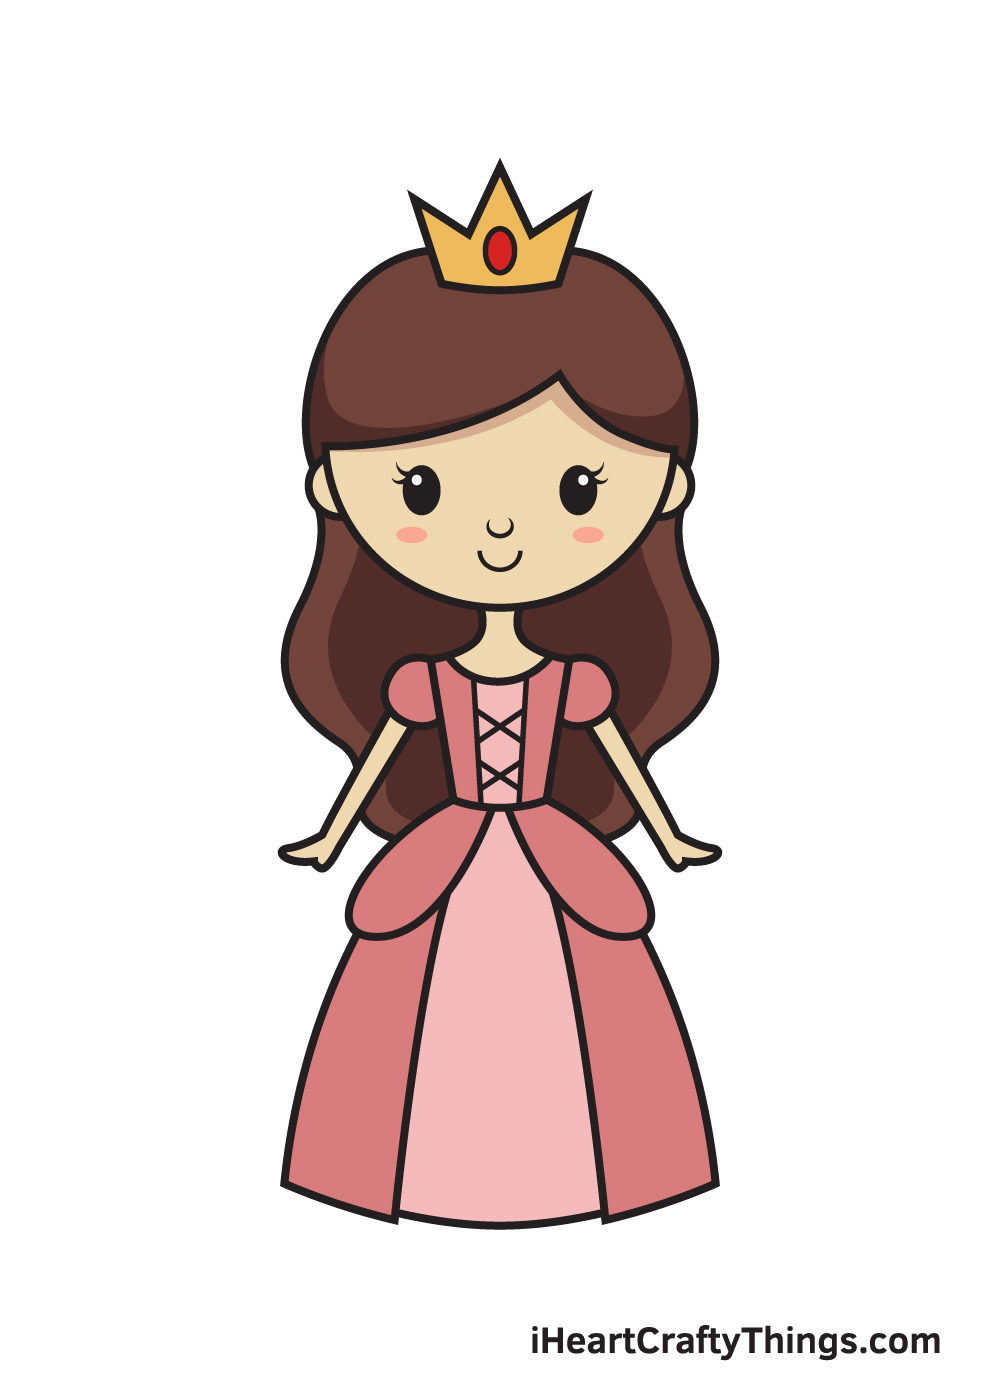 Princess Drawing – 9 Steps